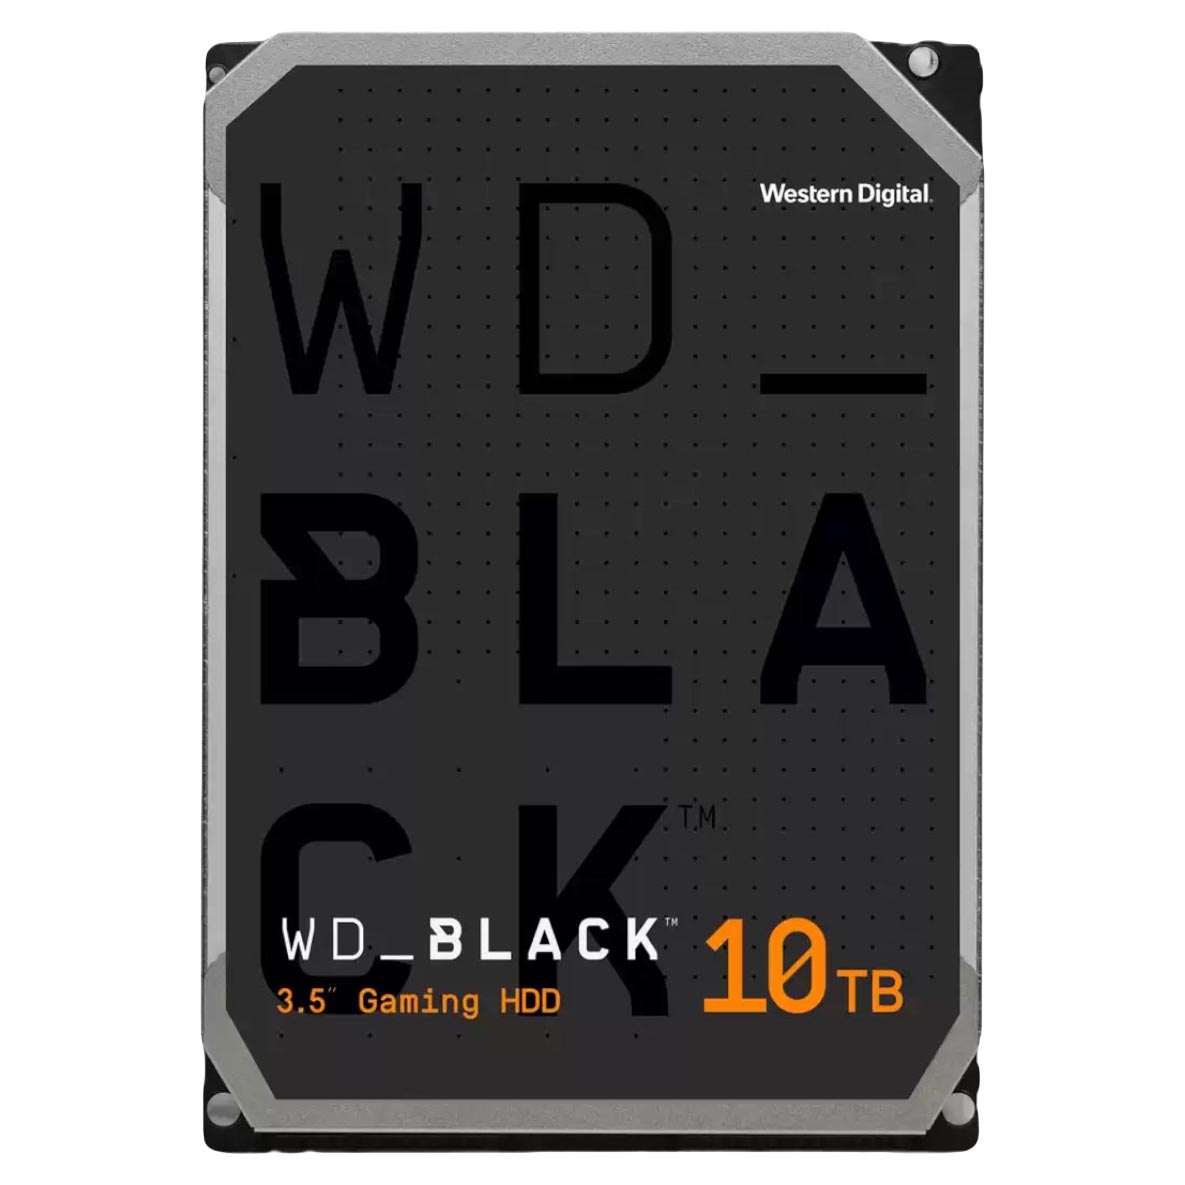 Внутренний жесткий диск Western Digital WD Black Gaming, WD101FZBX, 10 Тб жесткий диск western digital wd elements desktop 10 tb black wdbwlg0100hbk eesn